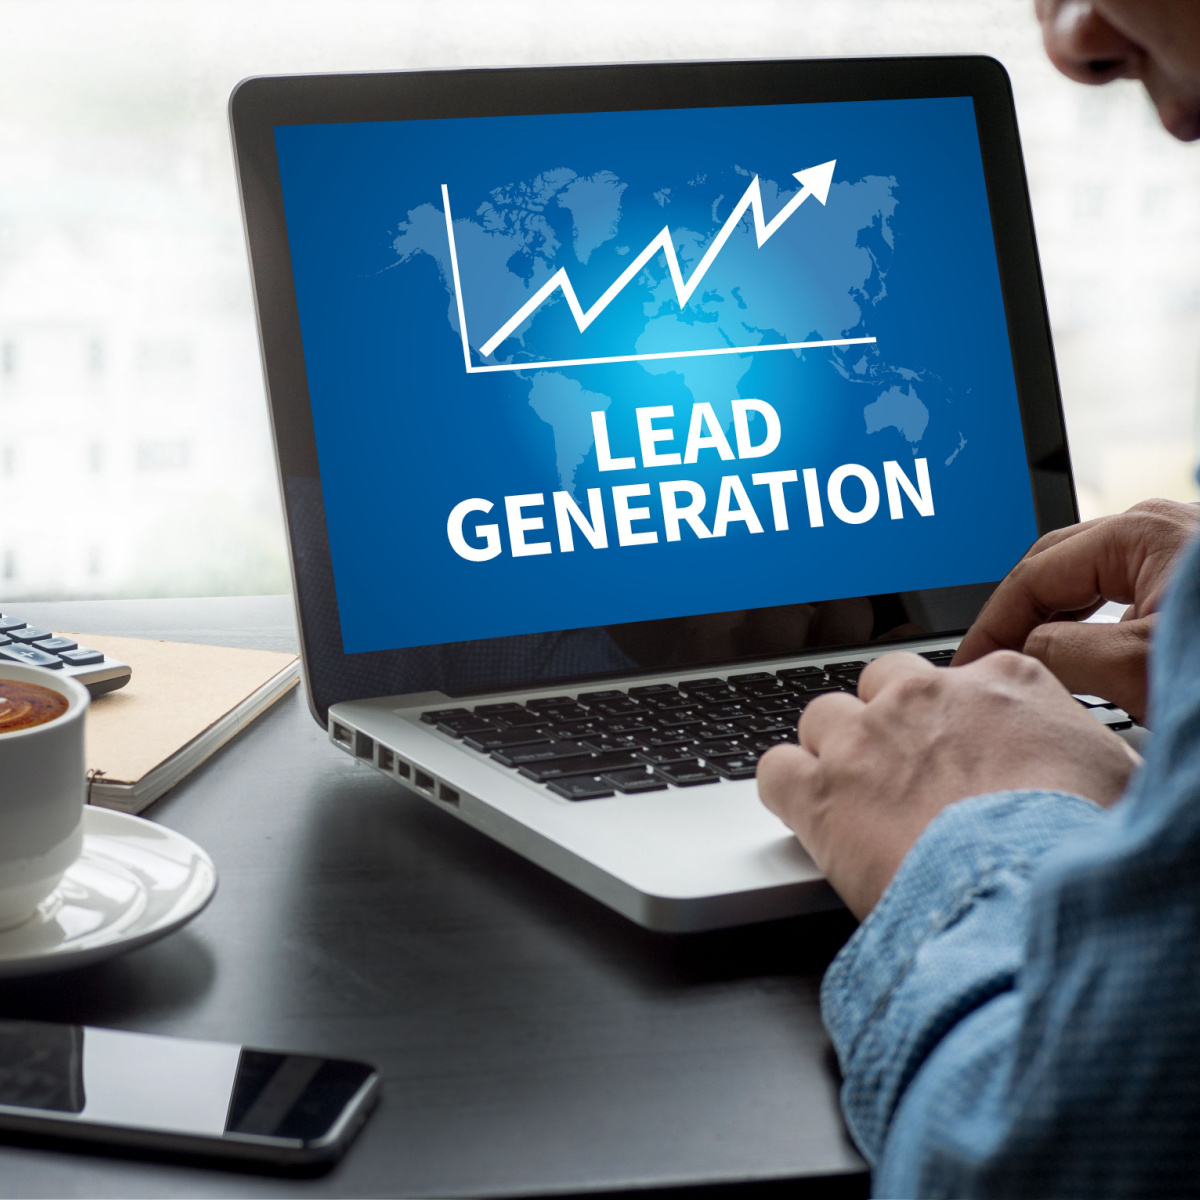 Houston digital marketing strategies for optimizing lead generation.